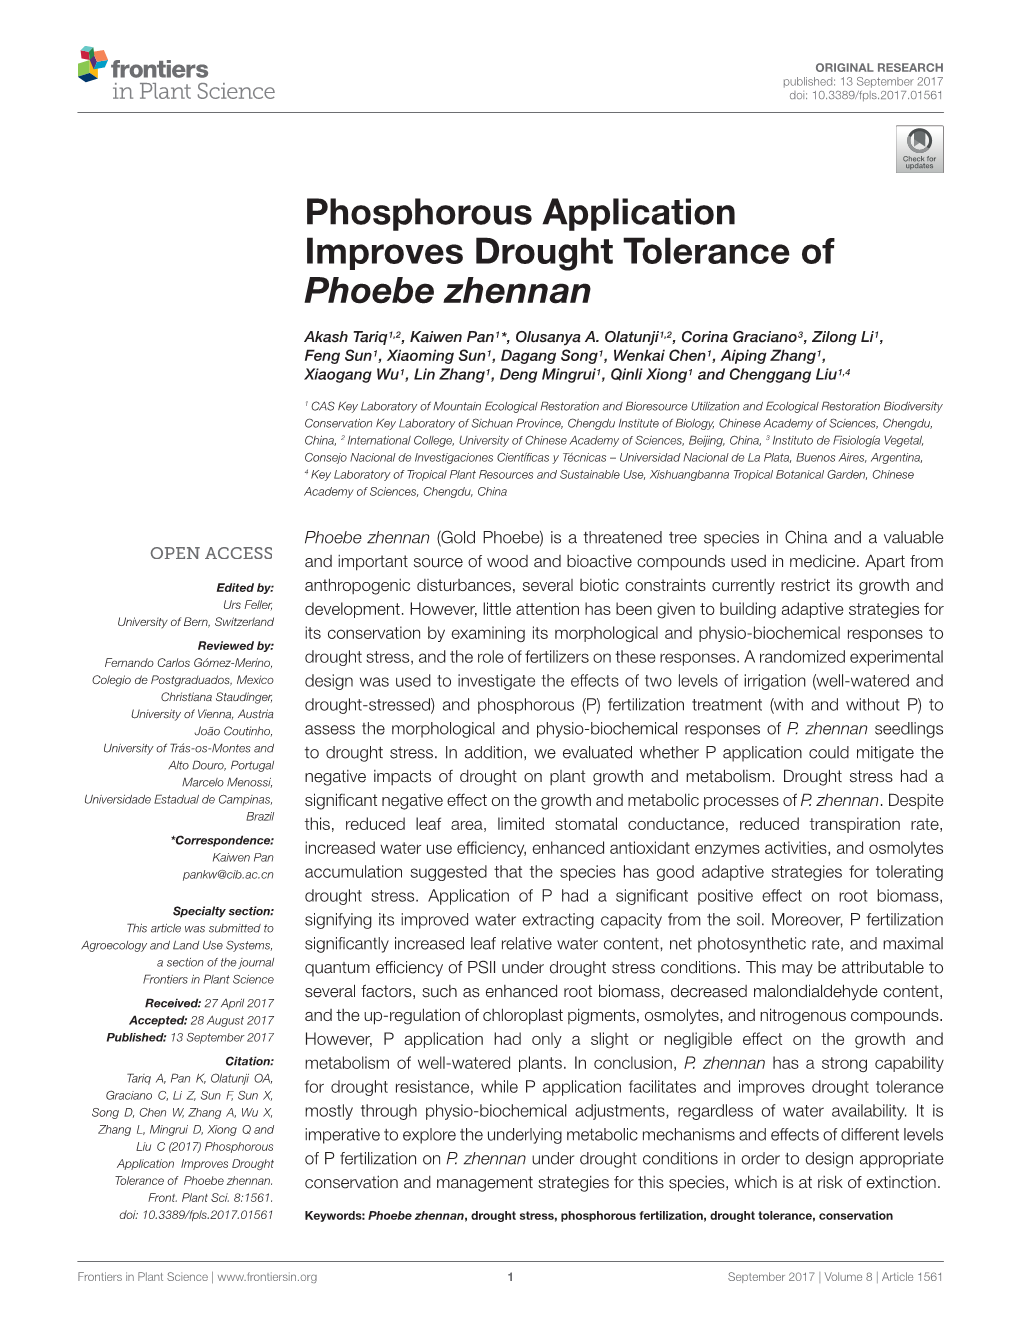 Phosphorous Application Improves Drought Tolerance of Phoebe Zhennan